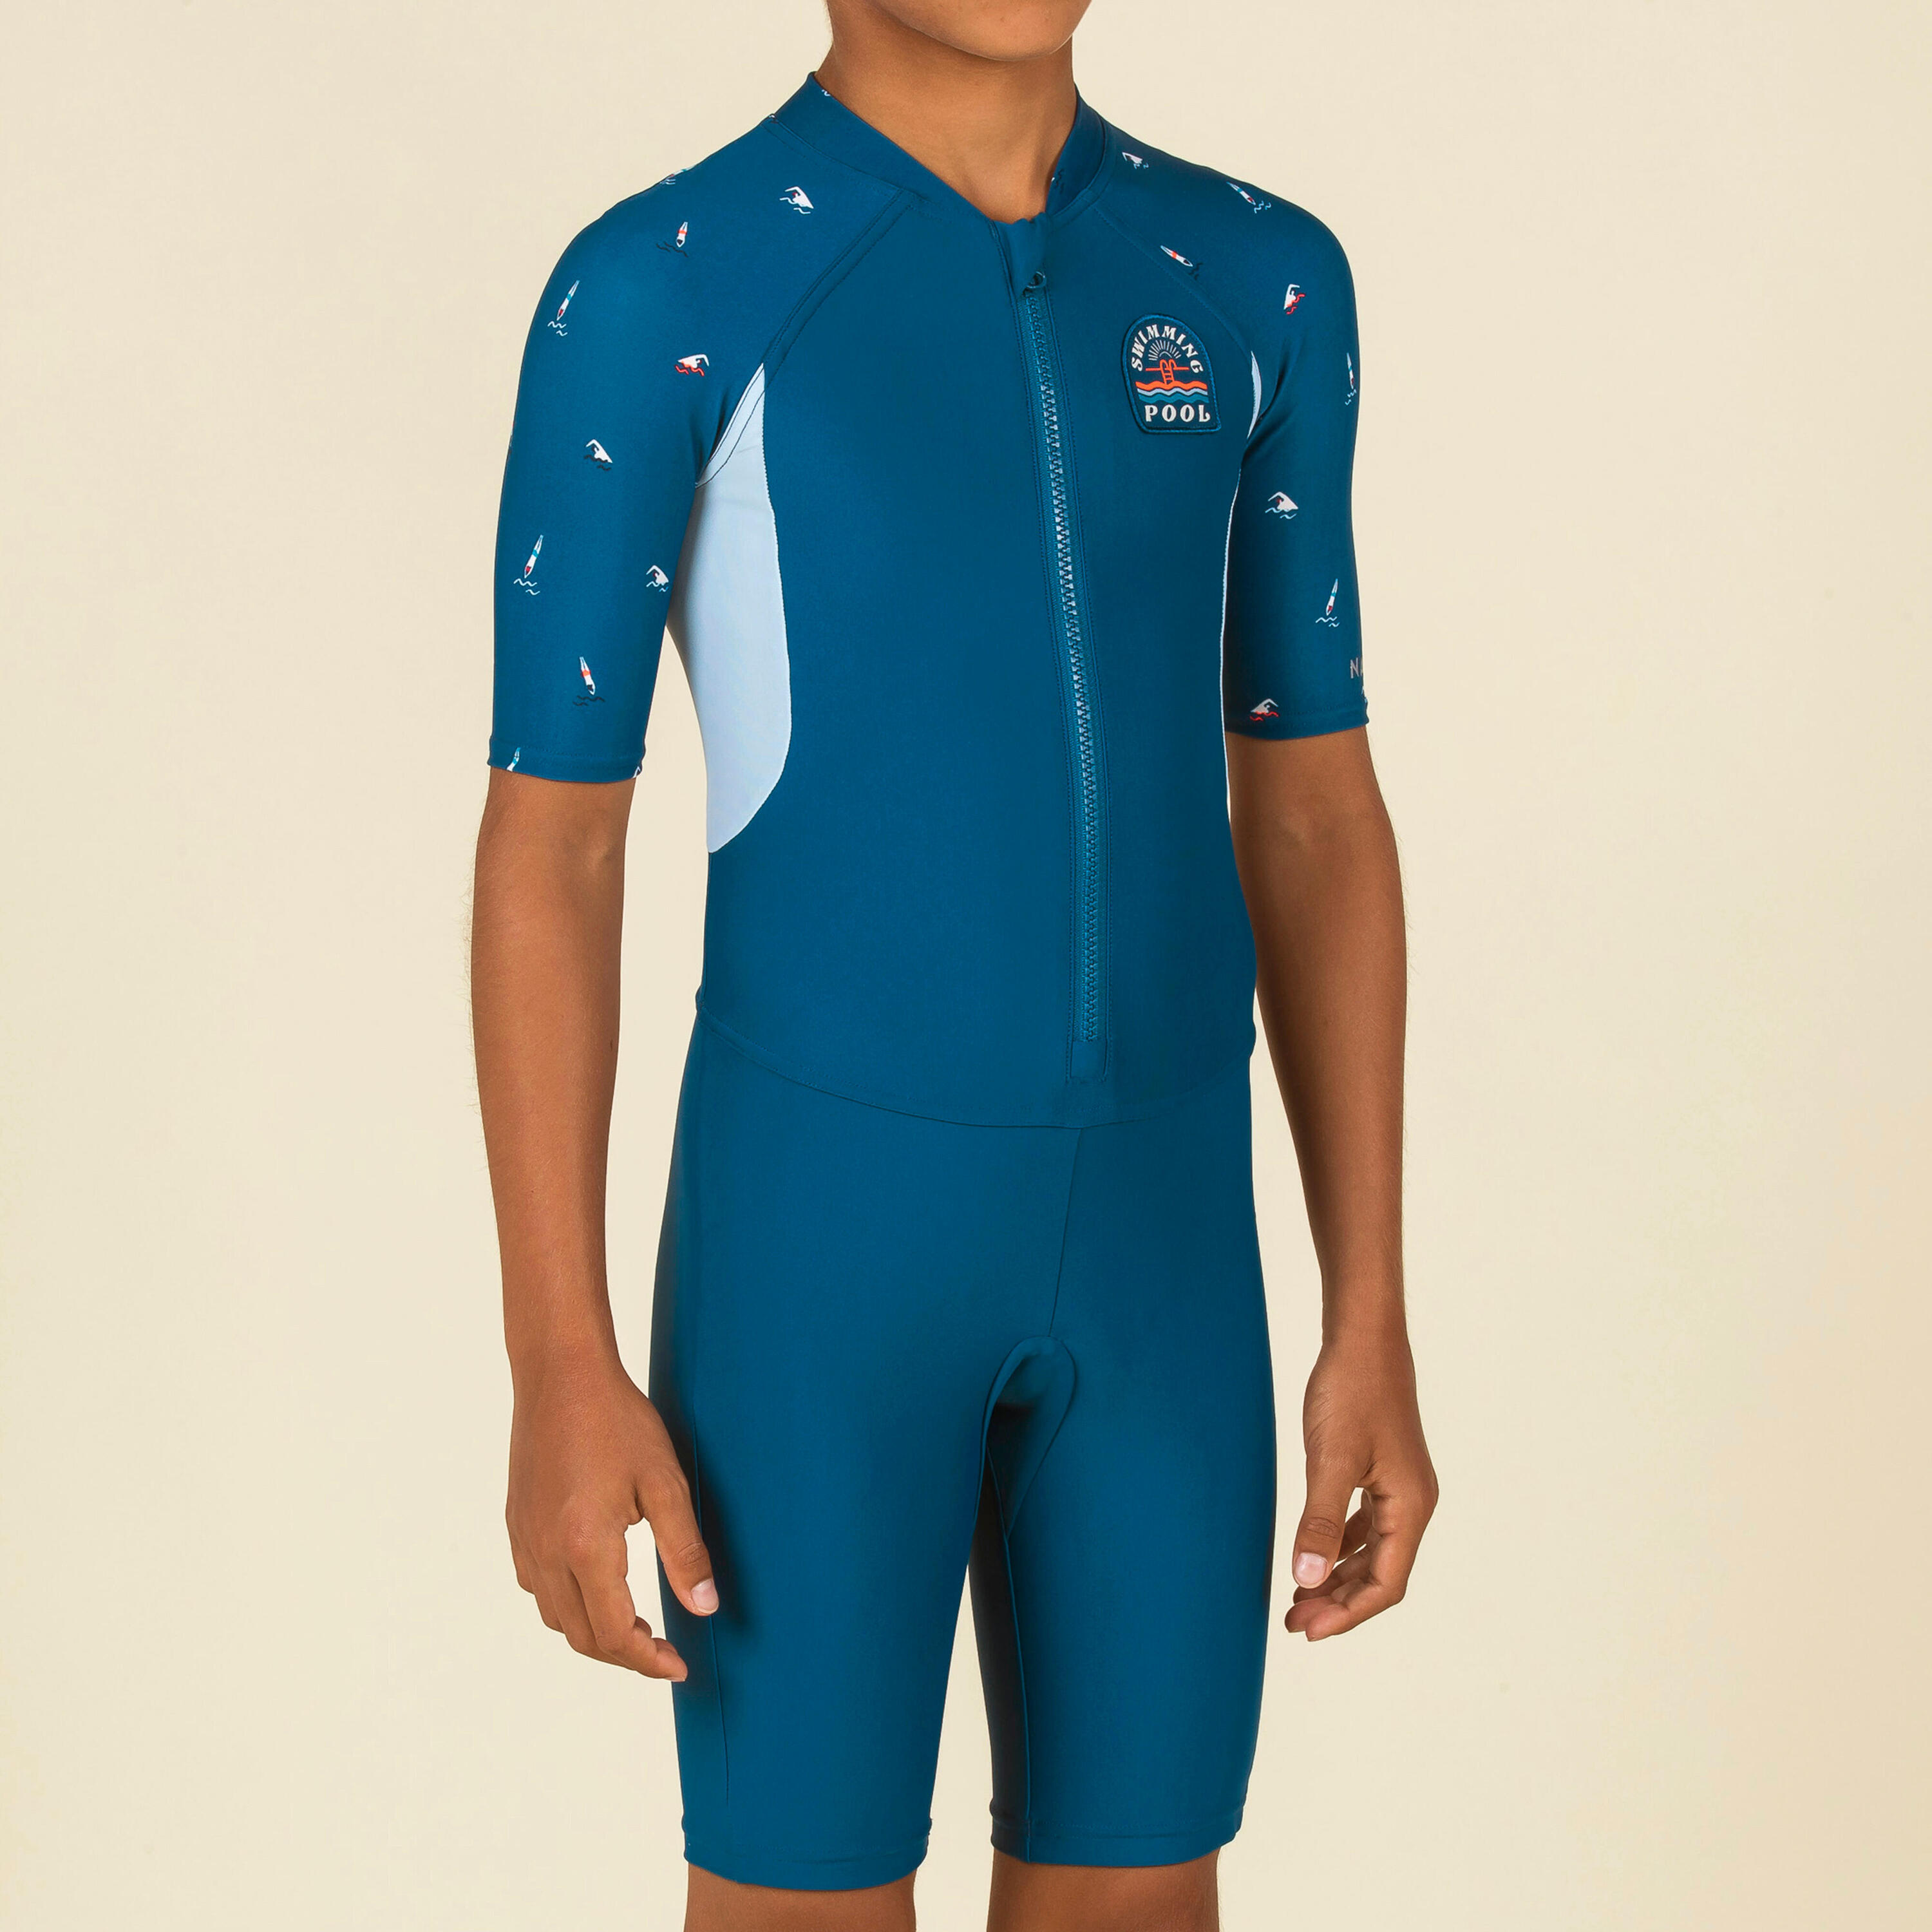 Boy's Wetsuit - Shorty 100 Short Sleeve - Navy Blue / Blue 2/4